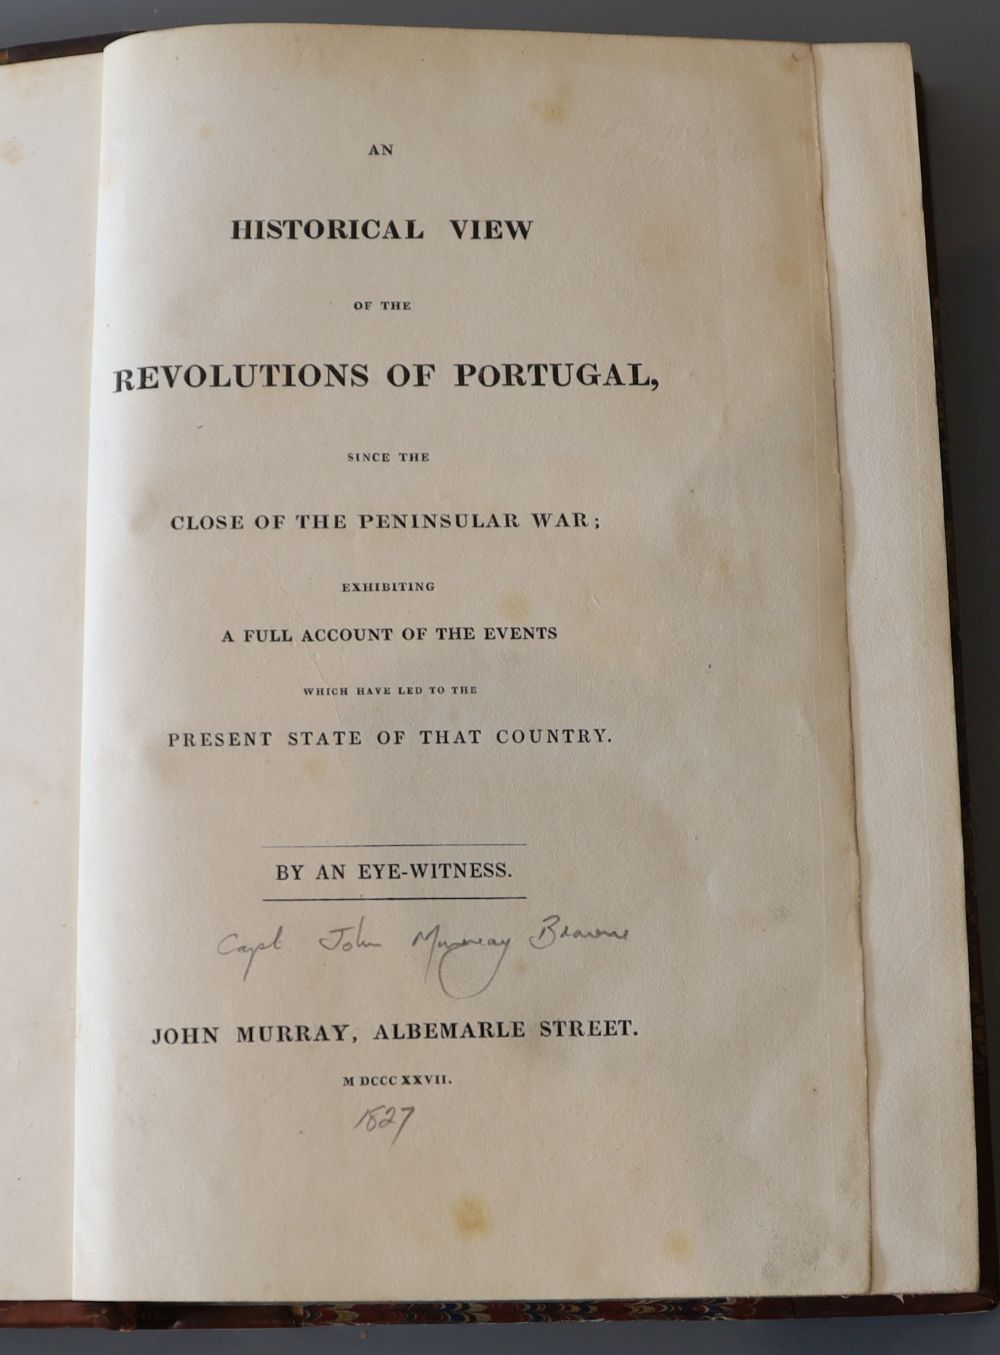 Browne, John Murray - Historical view of the revolutions of Portugal, quarter calf, 8vo, John Murray, London 1827